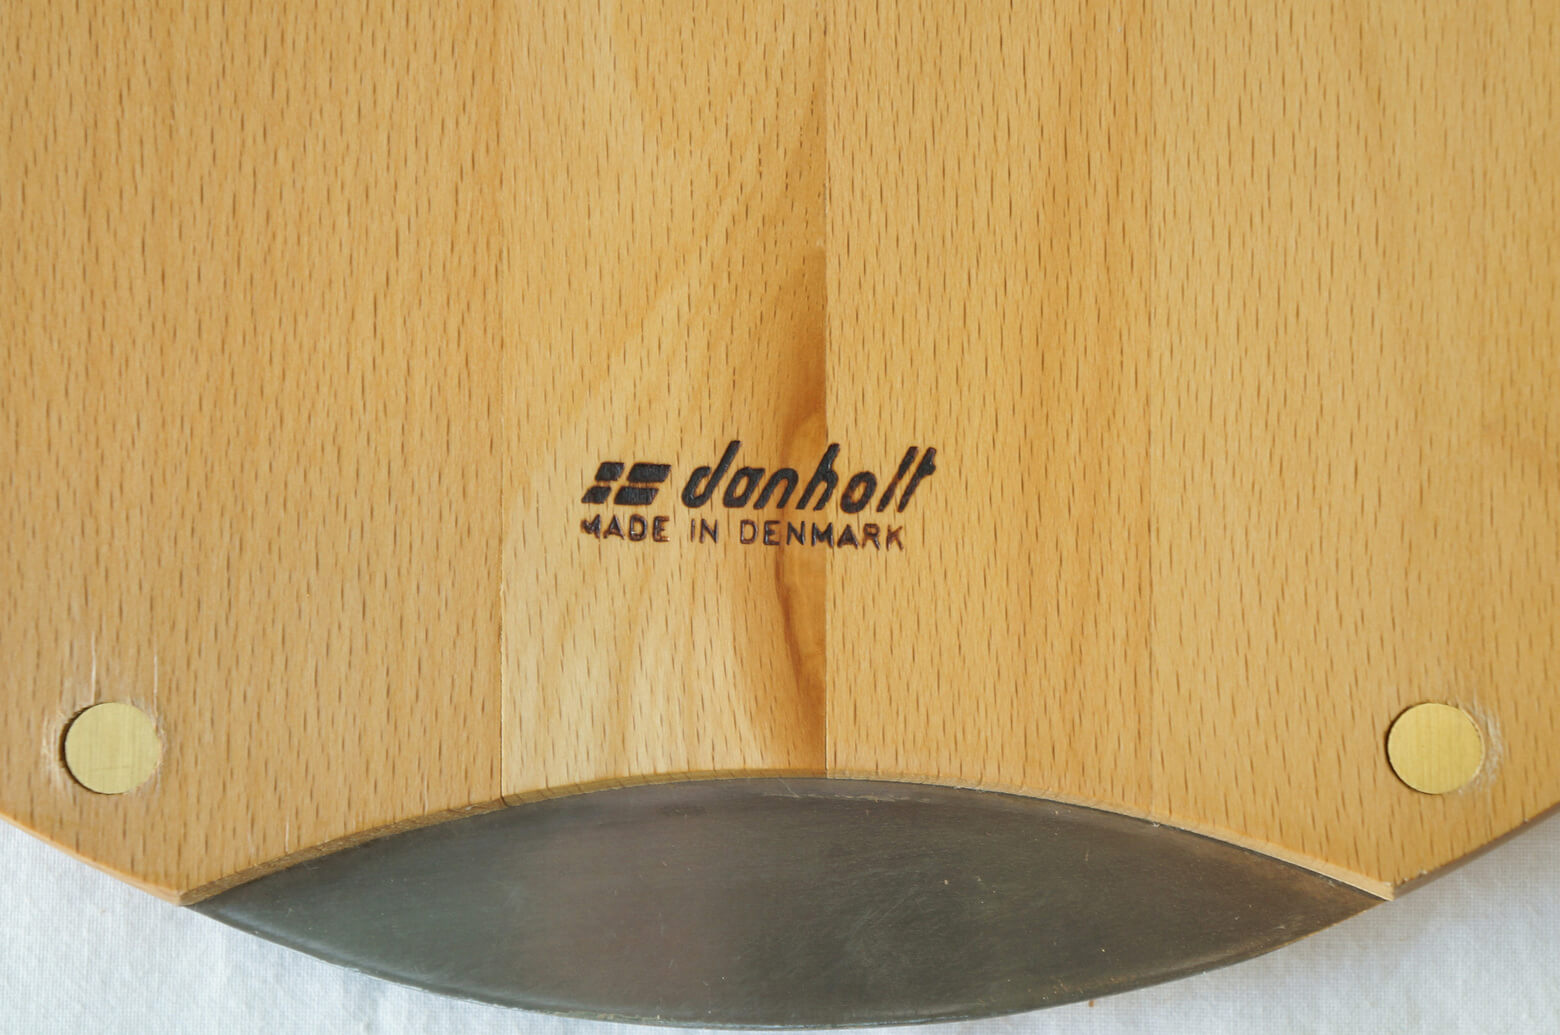 Beech Wood Cutting Board Made In Denmark/デンマーク製 カッティングボード ビーチ材 北欧雑貨 食器 インテリア 2